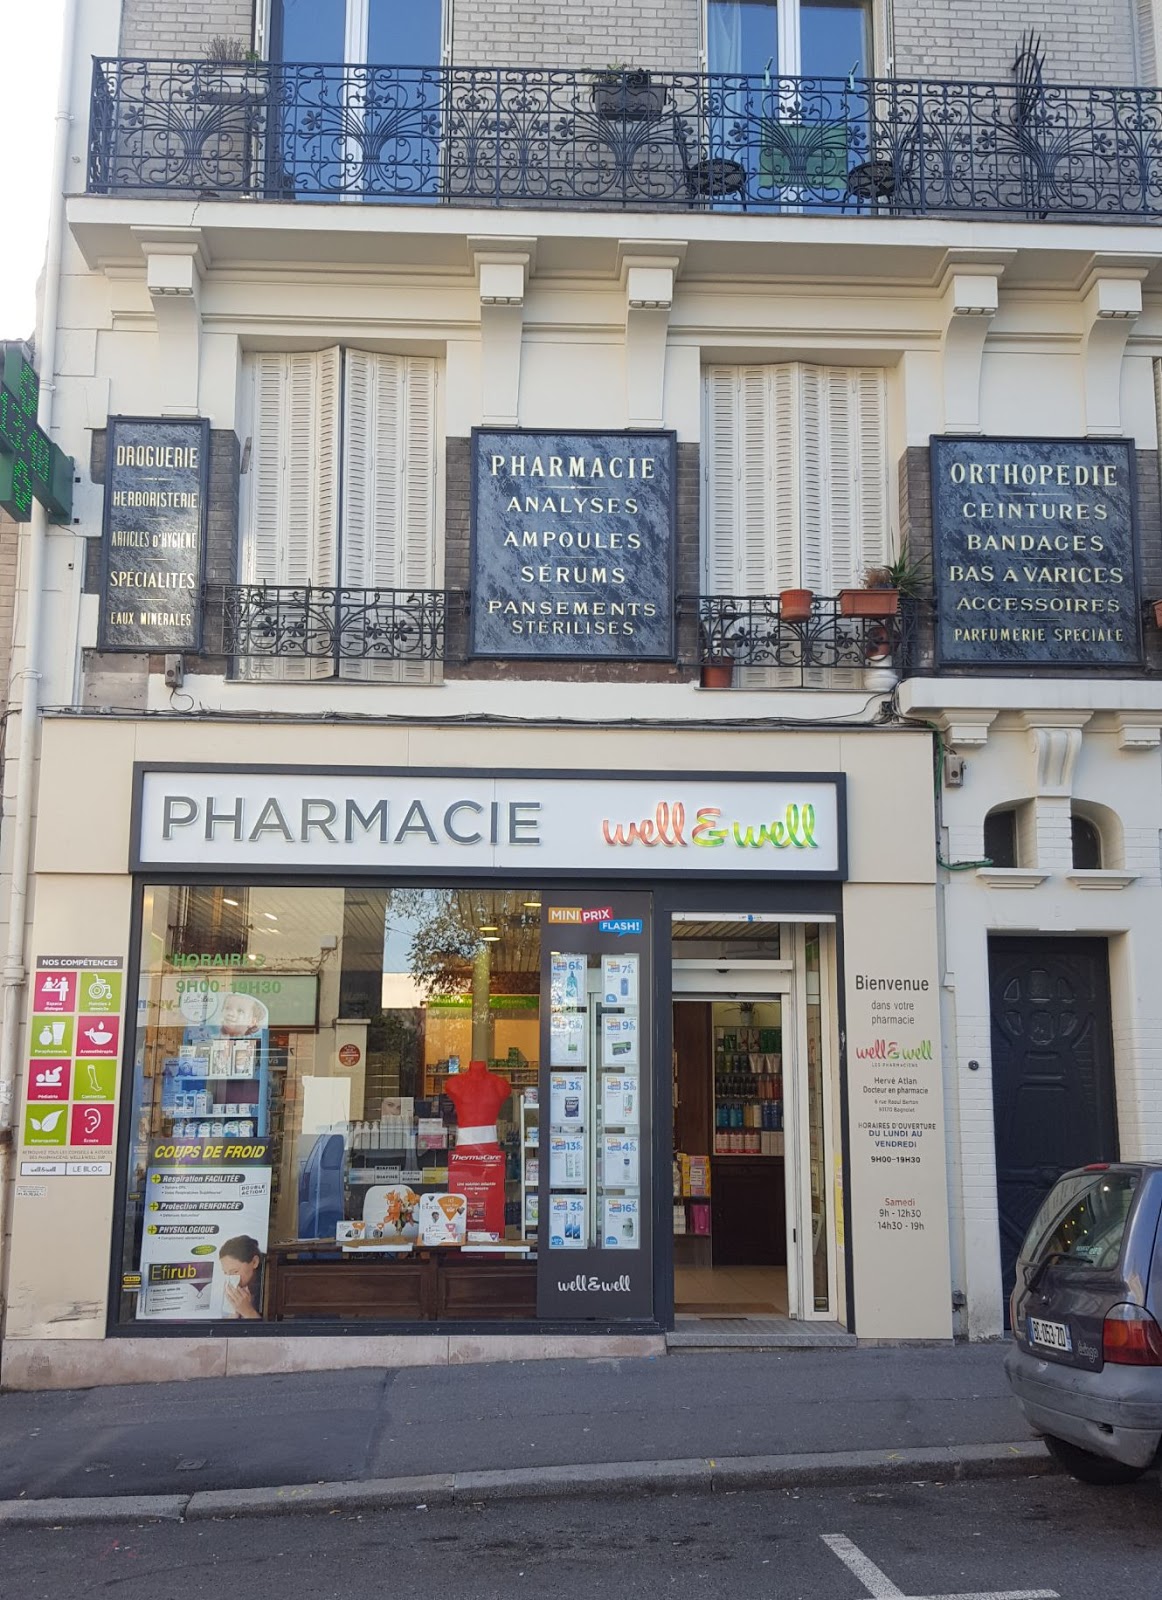 Pharmacie de la Mairie - Atlan well&well